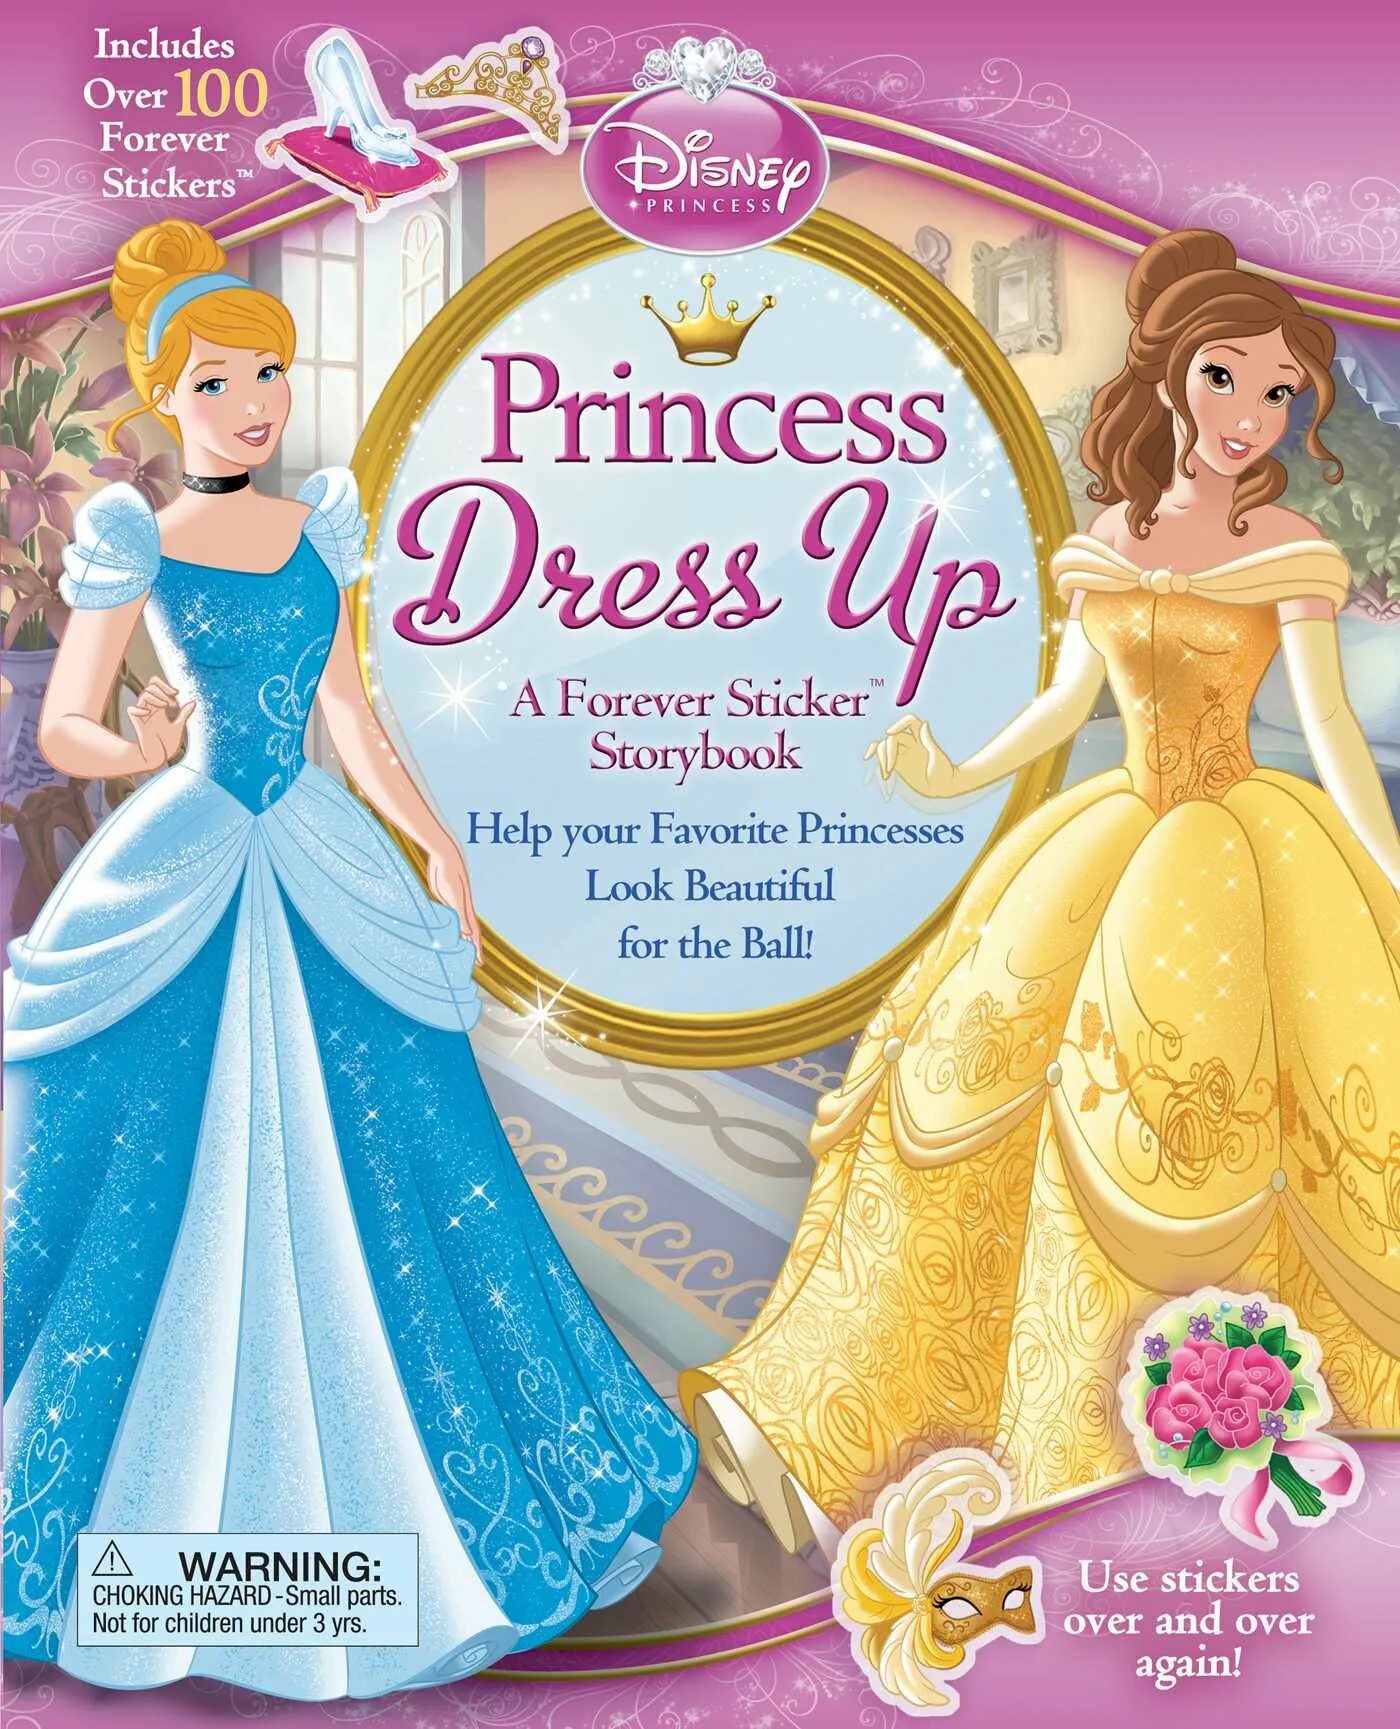 100 принцесс. Фиалка Storybook Princess. Форевер принцесс. Disney Princess Sticker book. Фаворит принцесс.